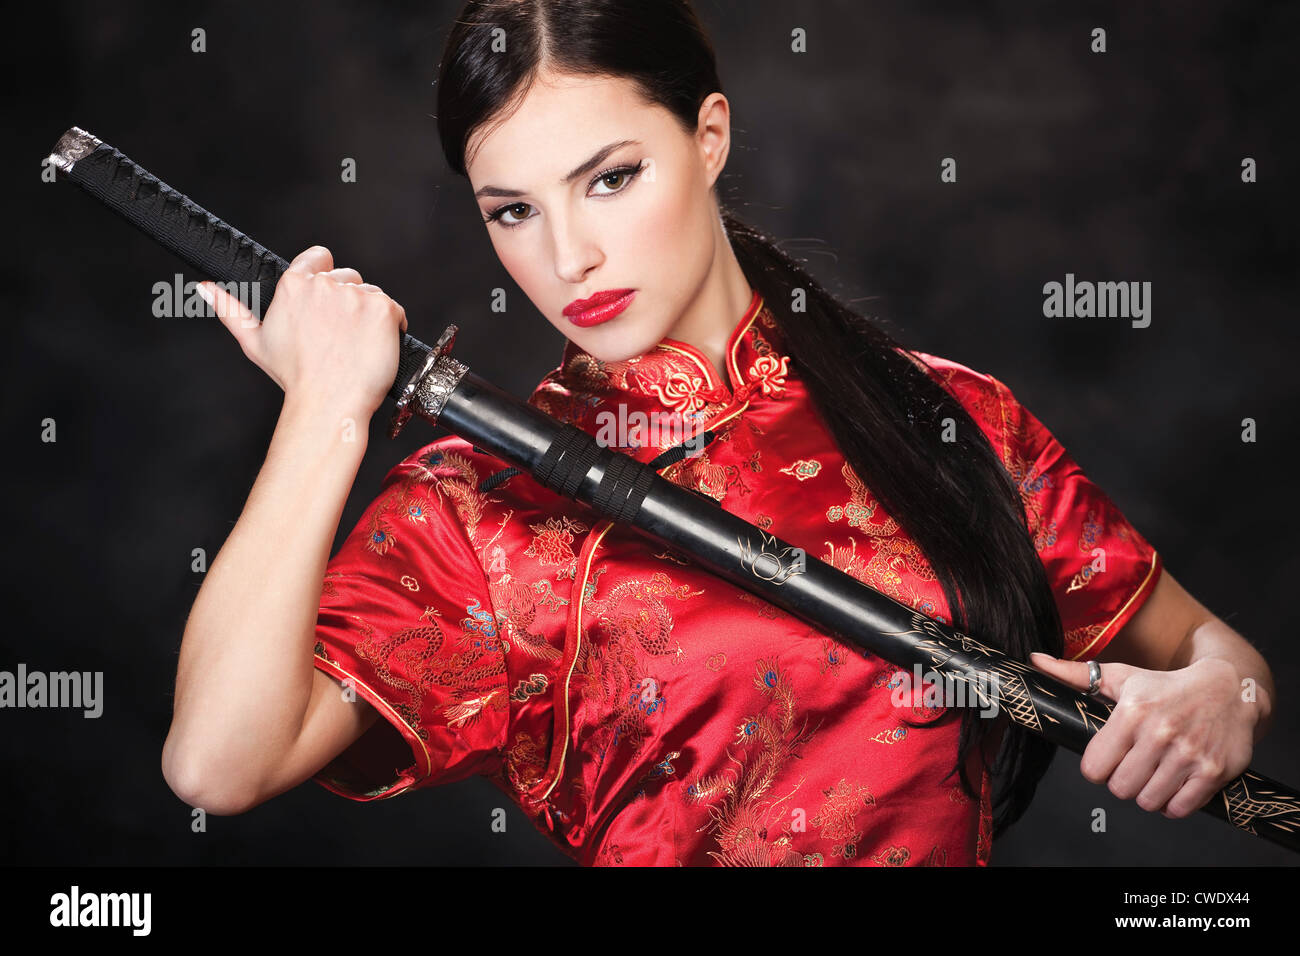 Woman with katana hi-res stock photography and images - Alamy